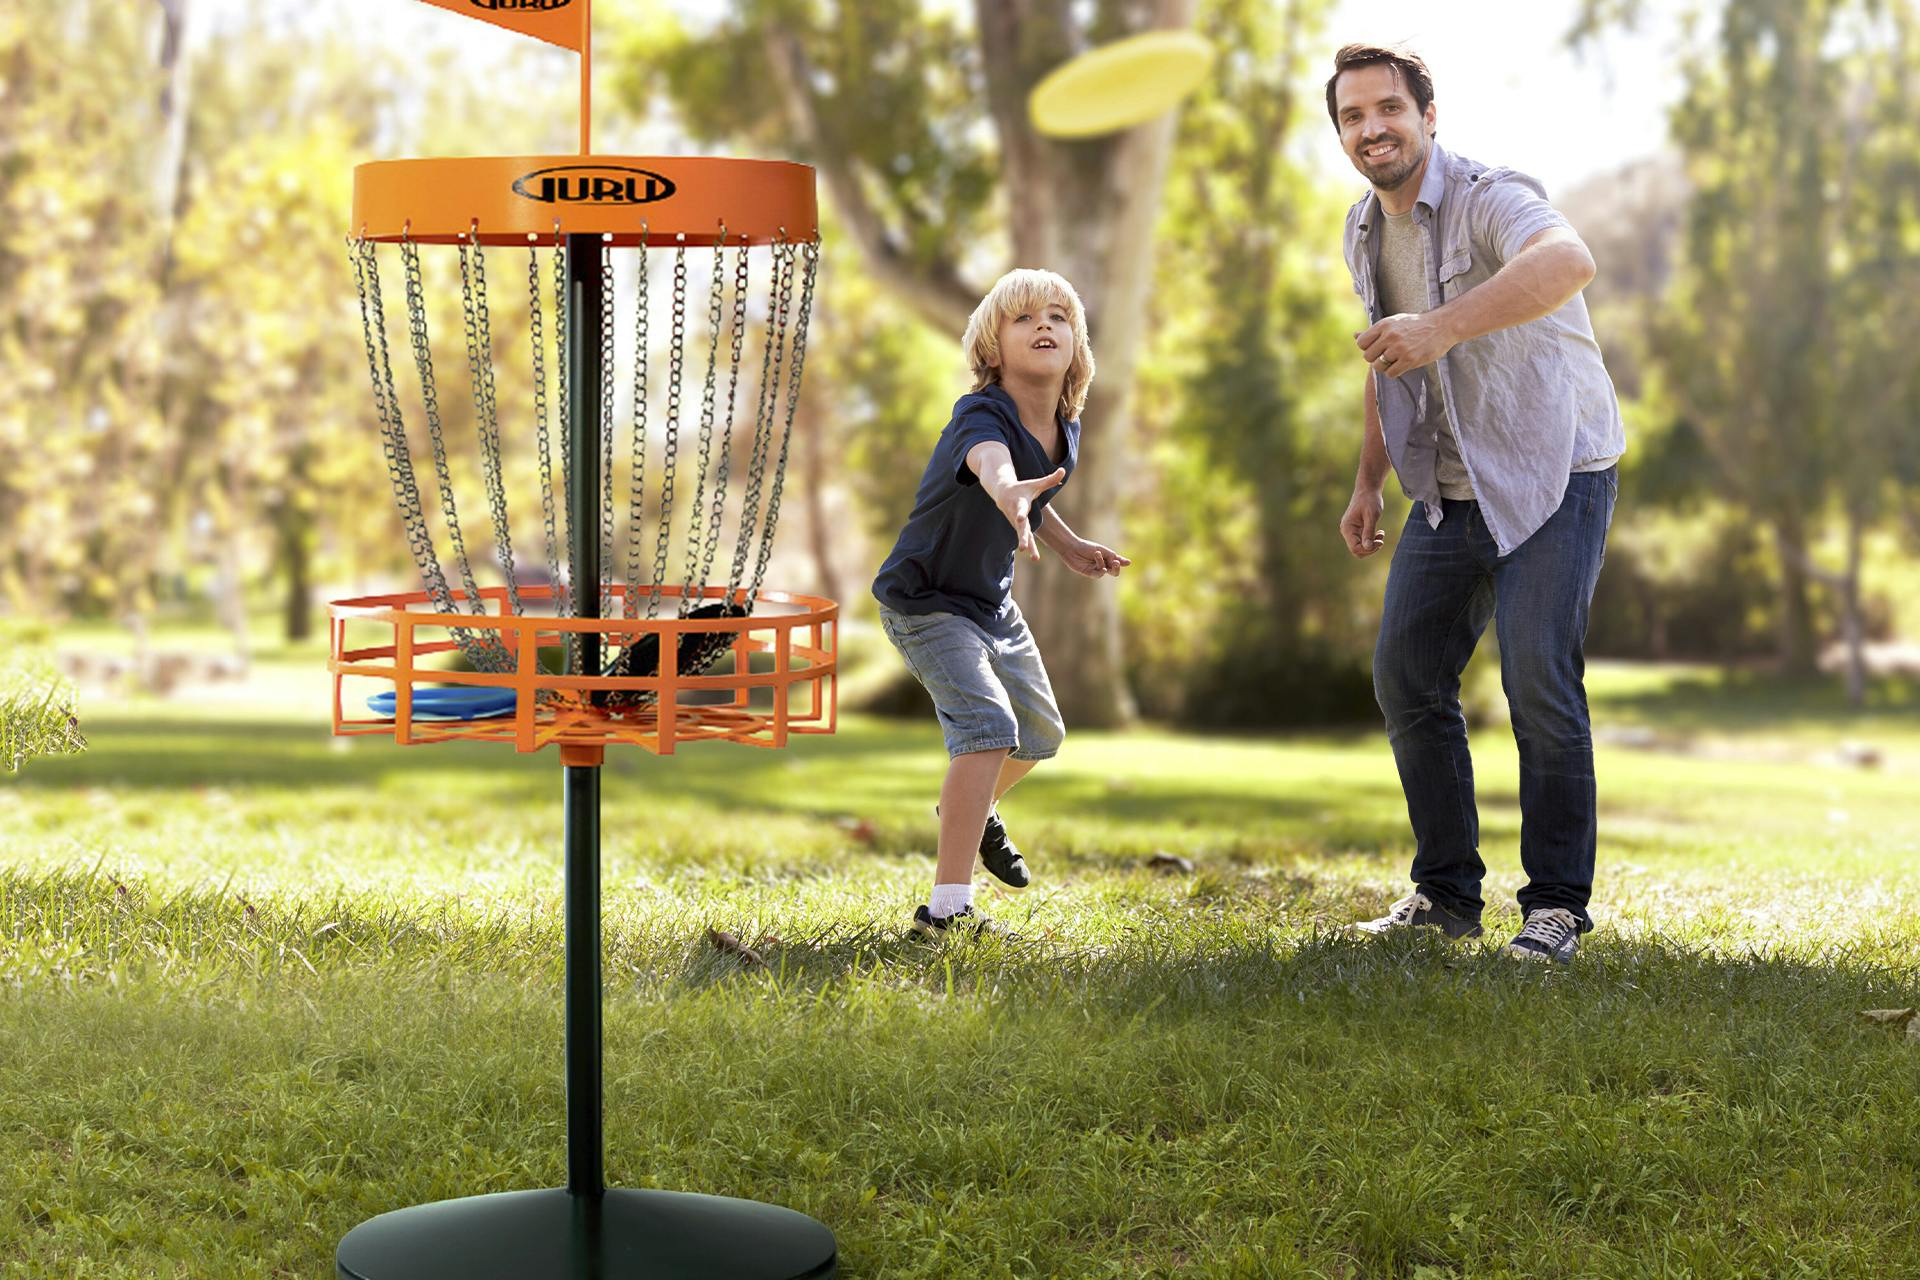 Mies ja lapsi pelaavat frisbeegolfia ulkona luonnossa